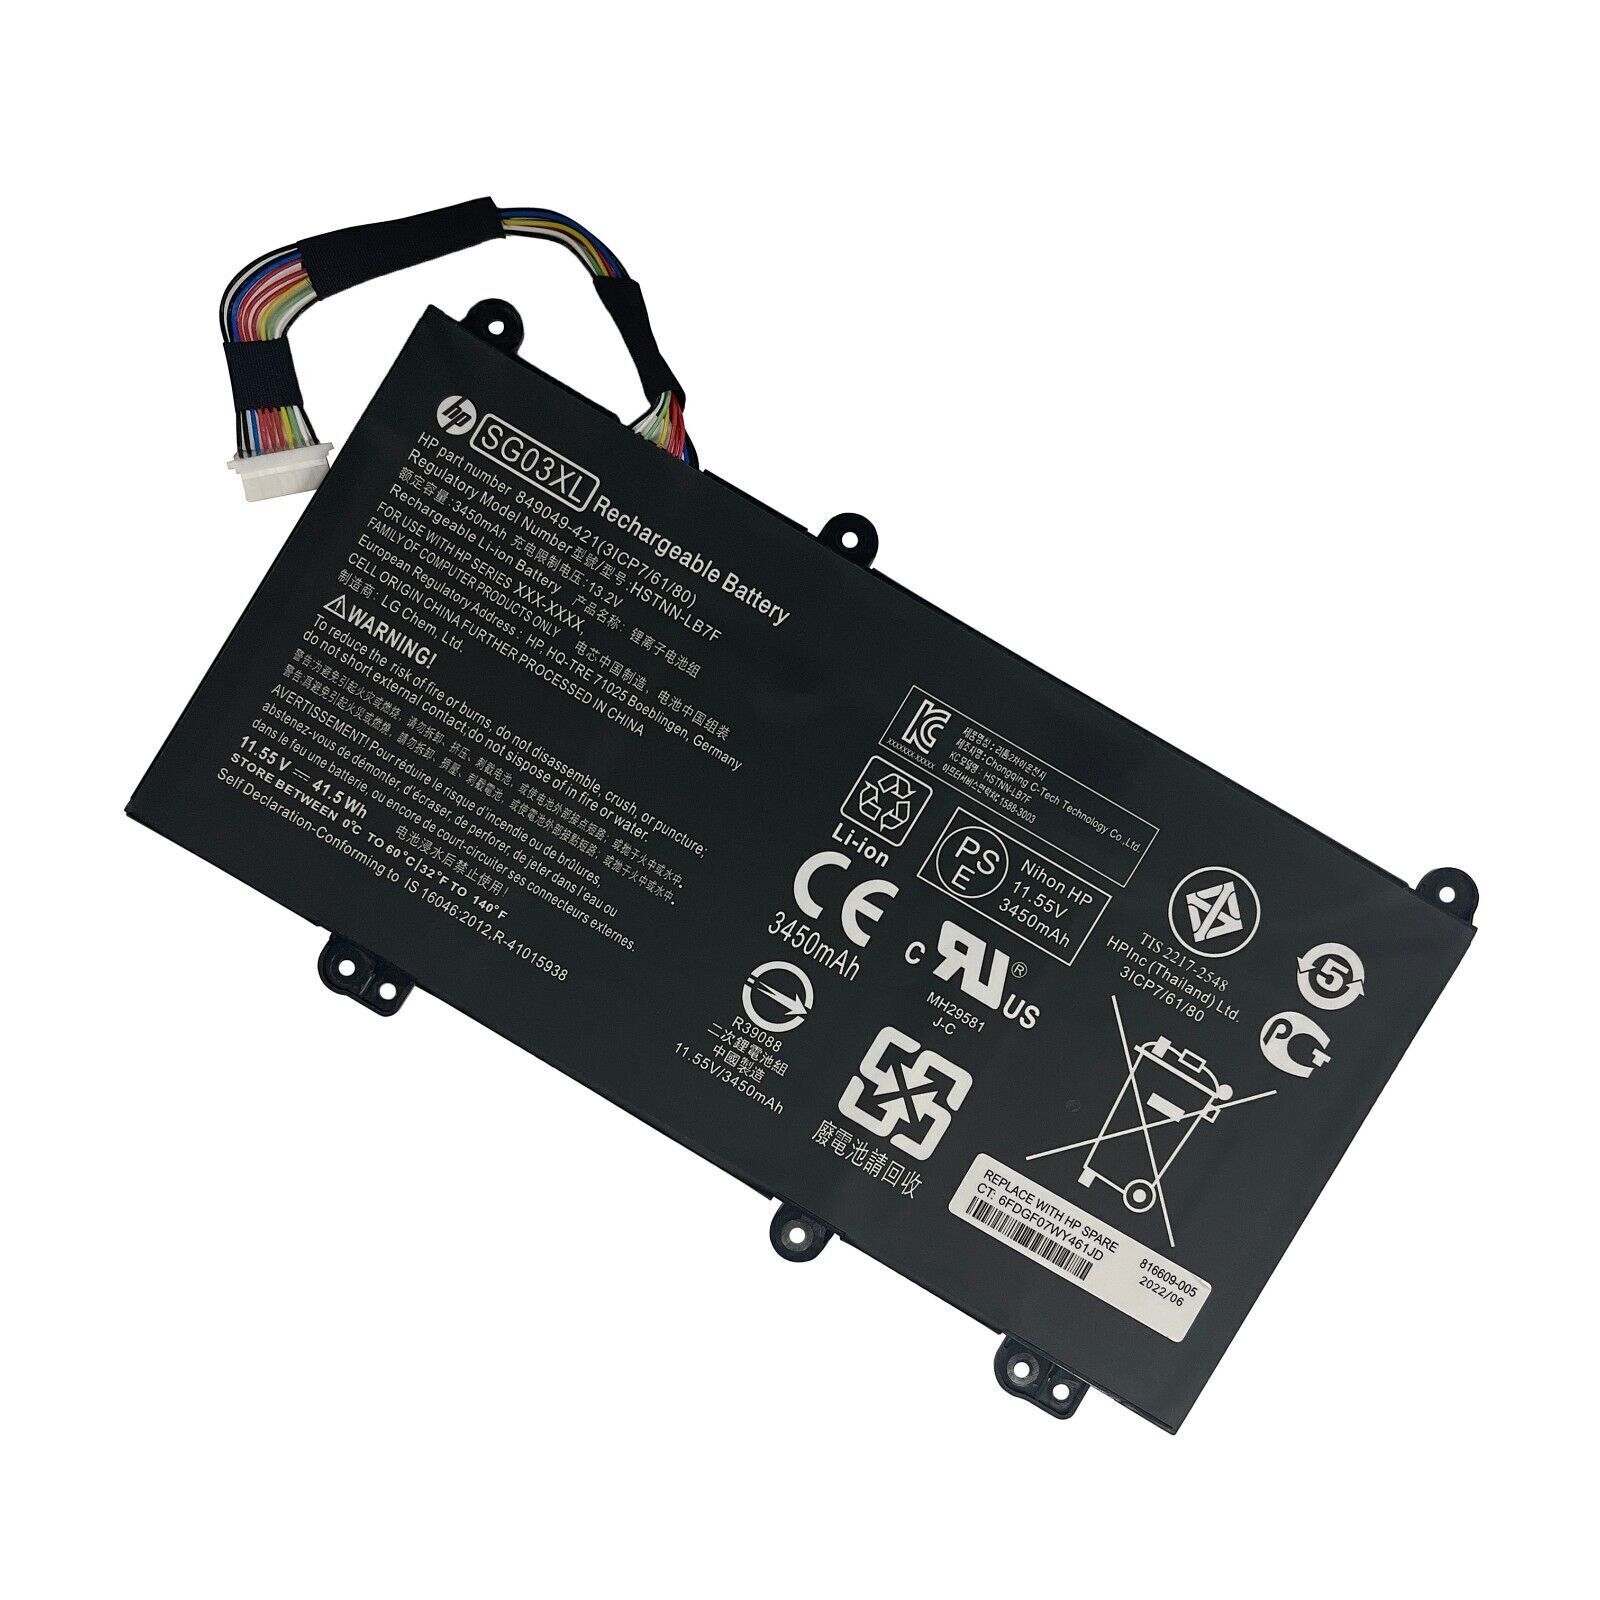 Genuine OEM SG03XL Battery For HP Envy 17-u011nr 17t-u000 m7-u109dx 849049-421